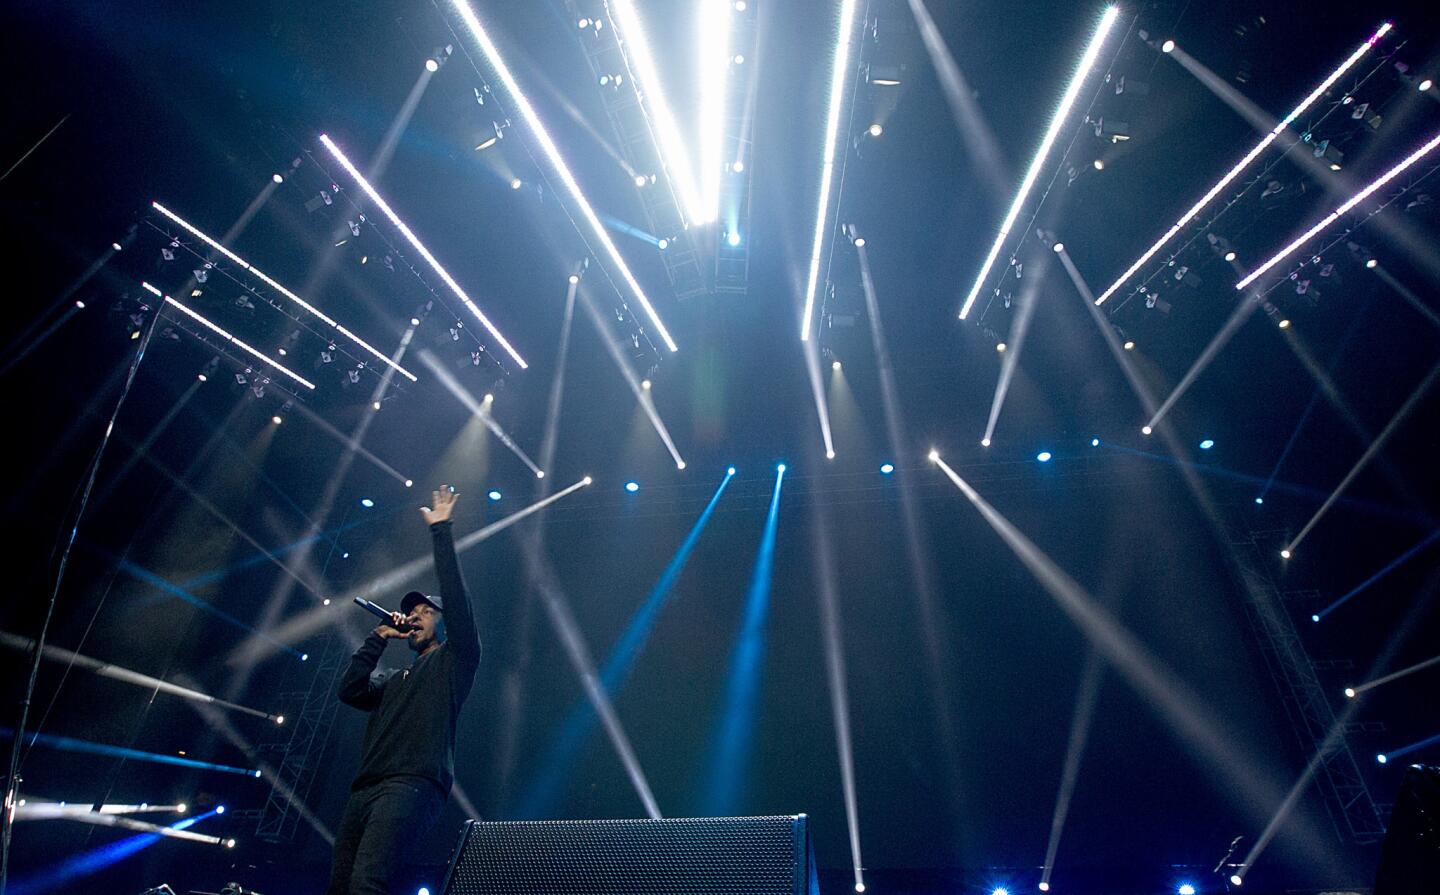 The full lighting treatment is turned on Kendrick Lamar's BET Experience performance.